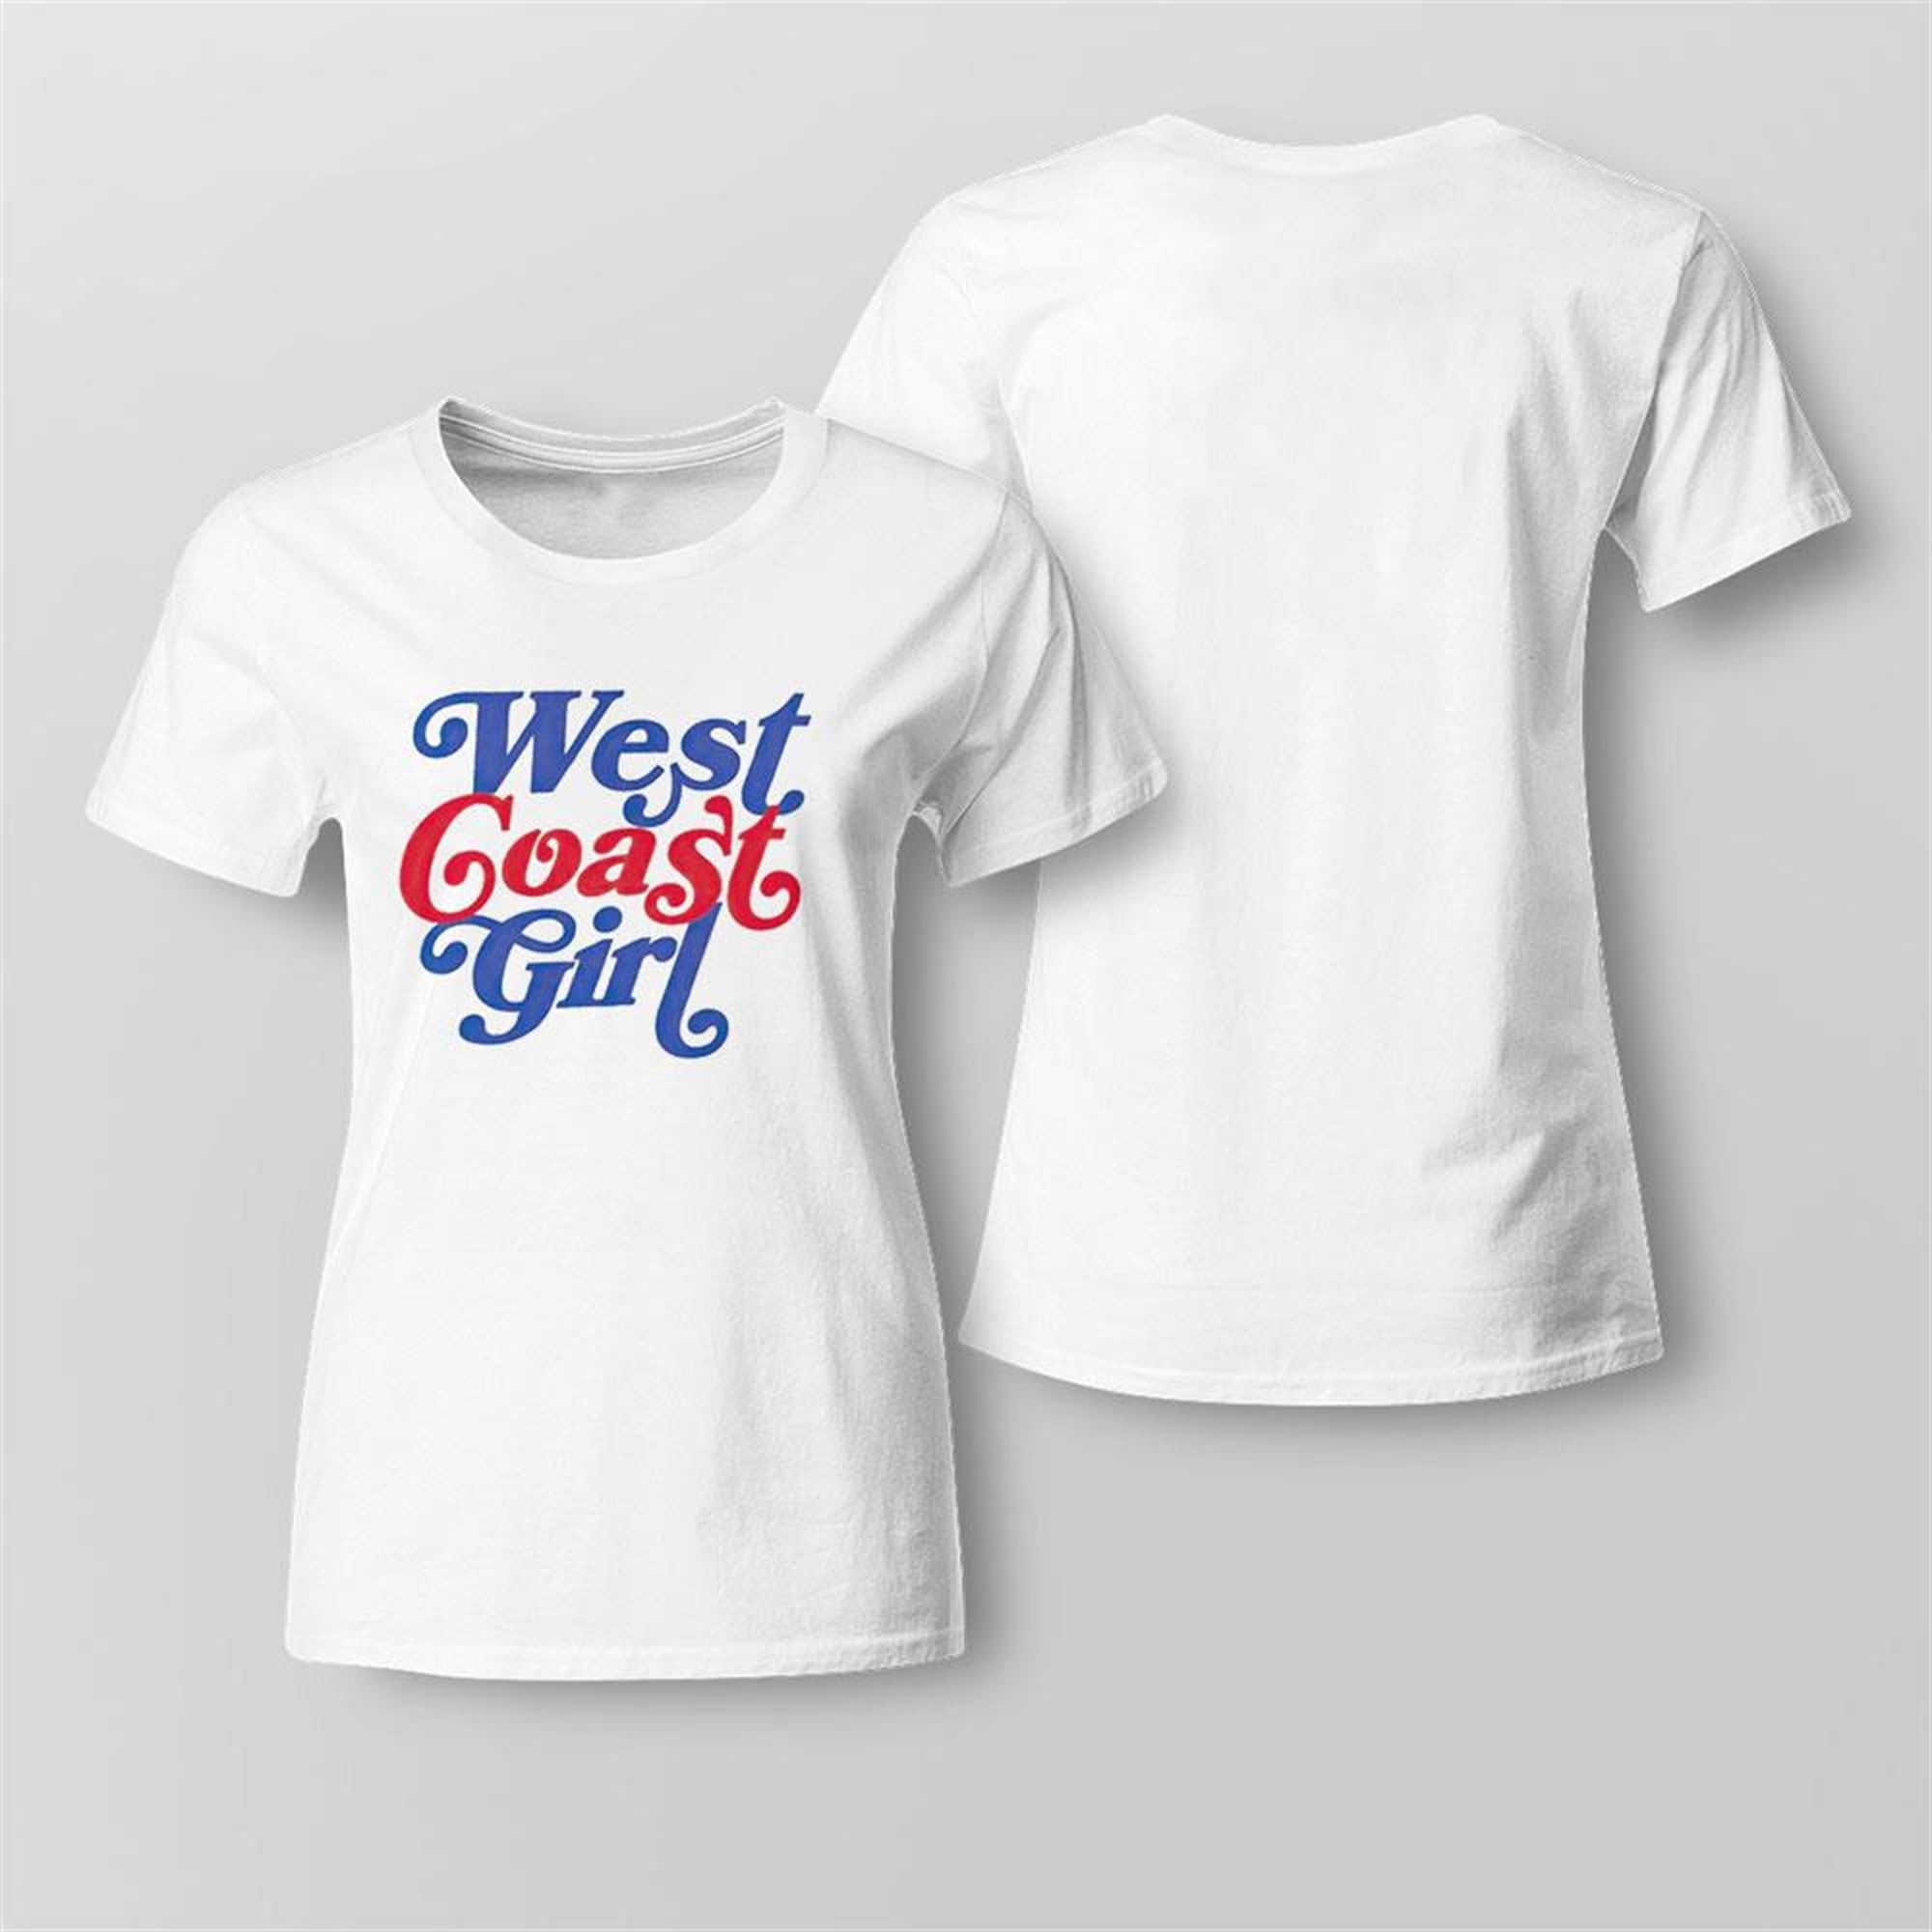 West Coast Girl Shirt